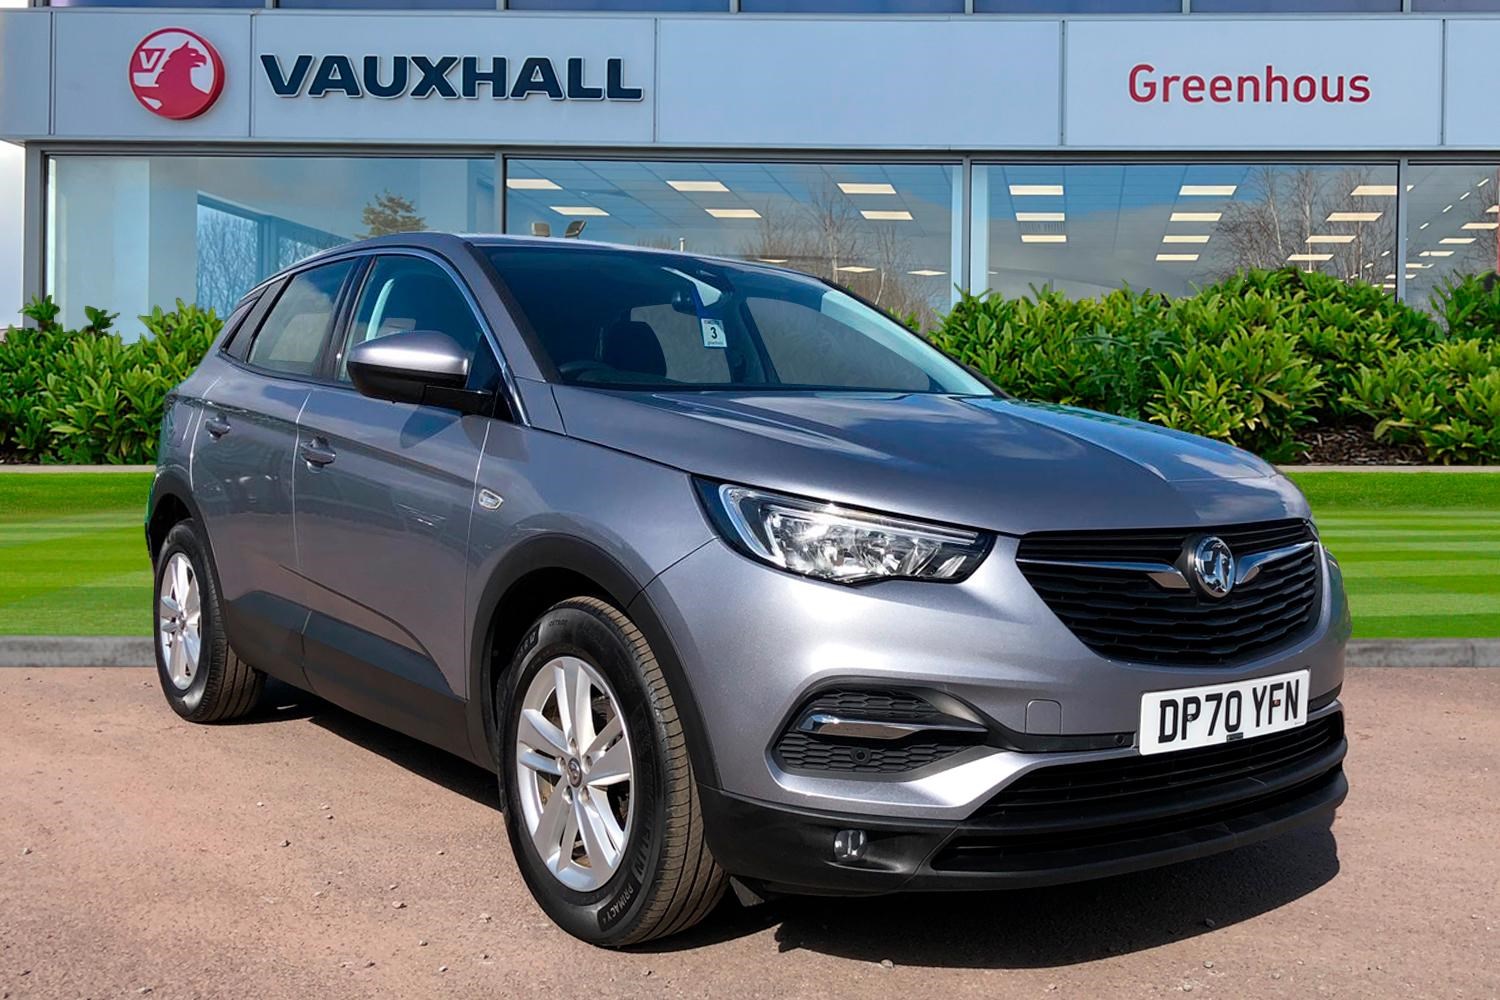 2020 used Vauxhall Grandland X 1.2T SE Premium 5dr